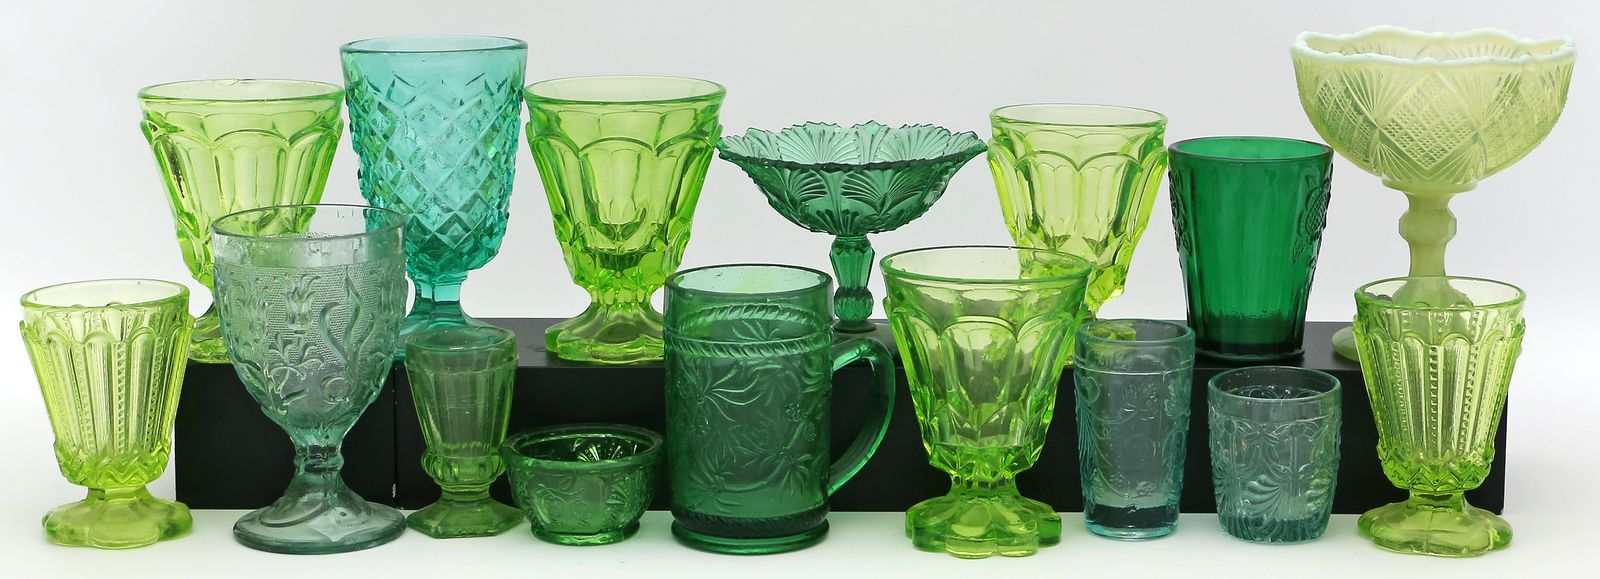 16 Teile überwiegend grünes Pressglas.